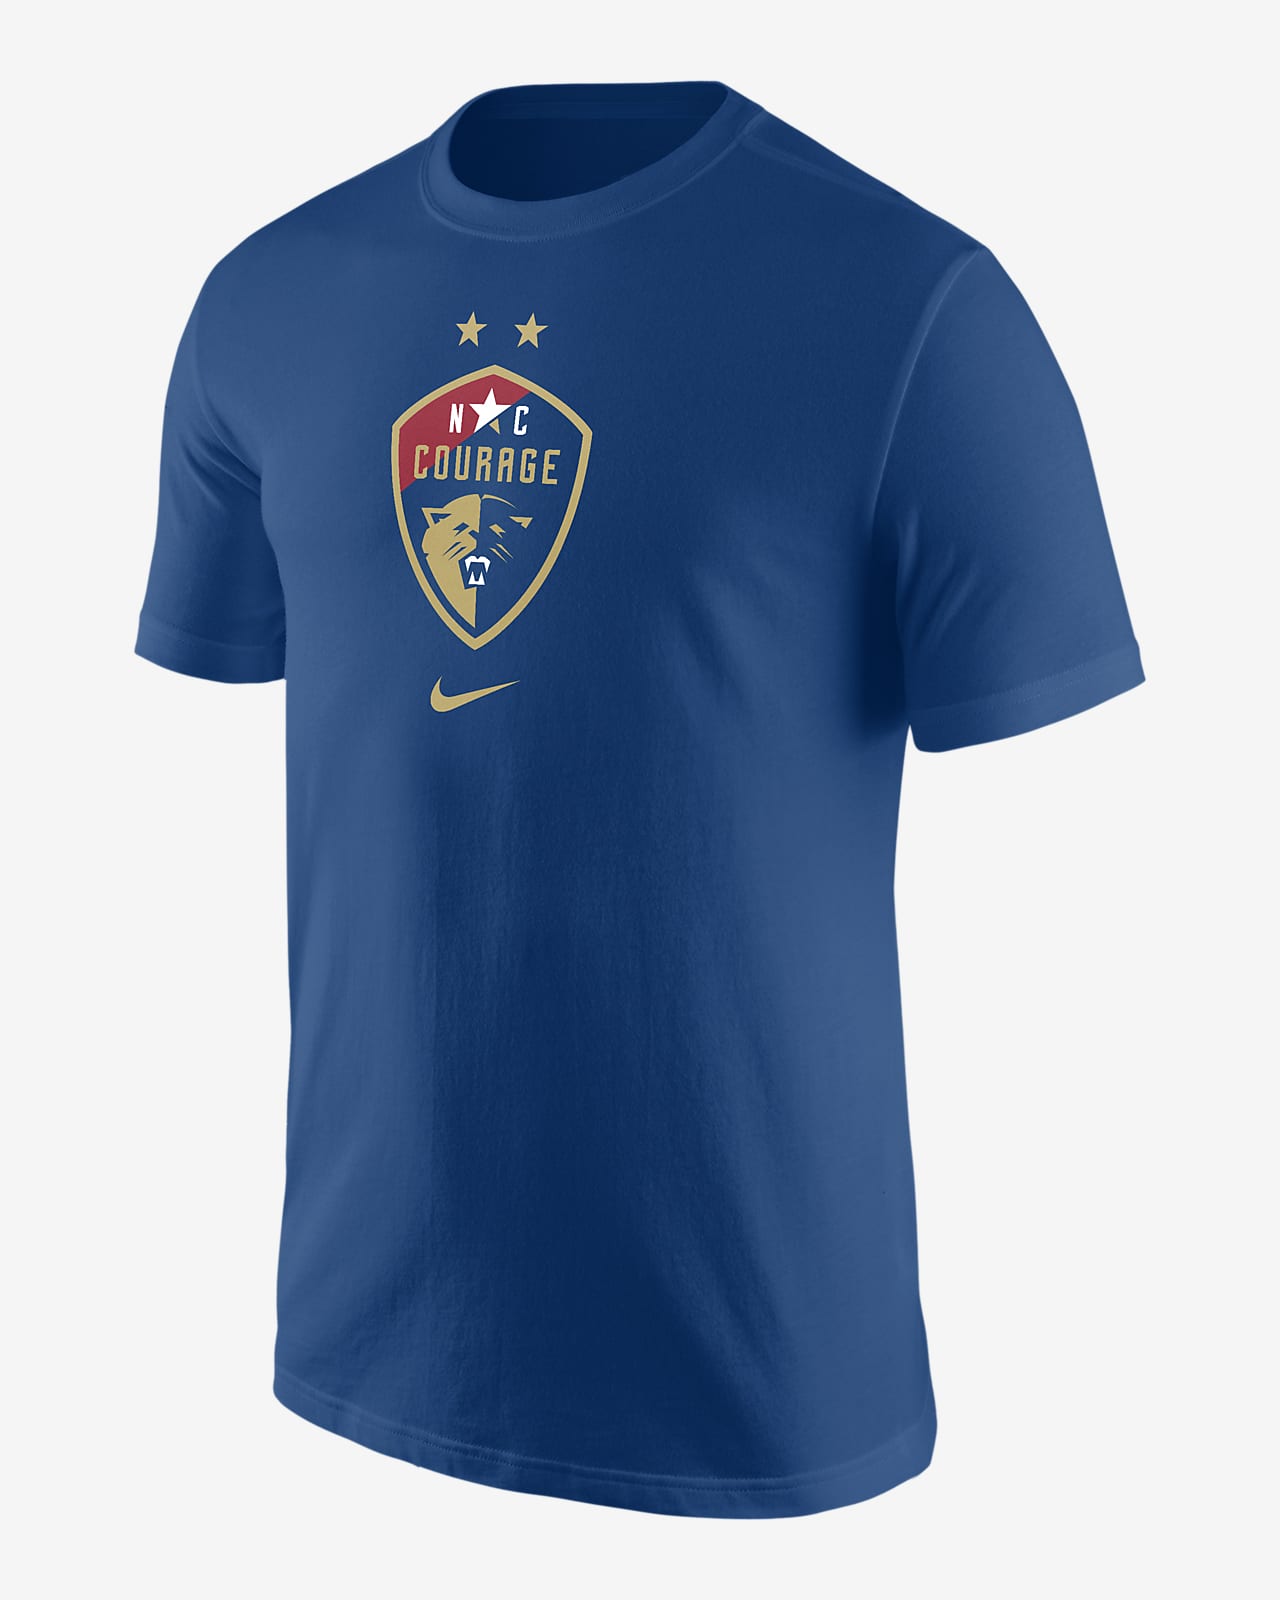 North Carolina Courage Men's Nike NWSL T-Shirt